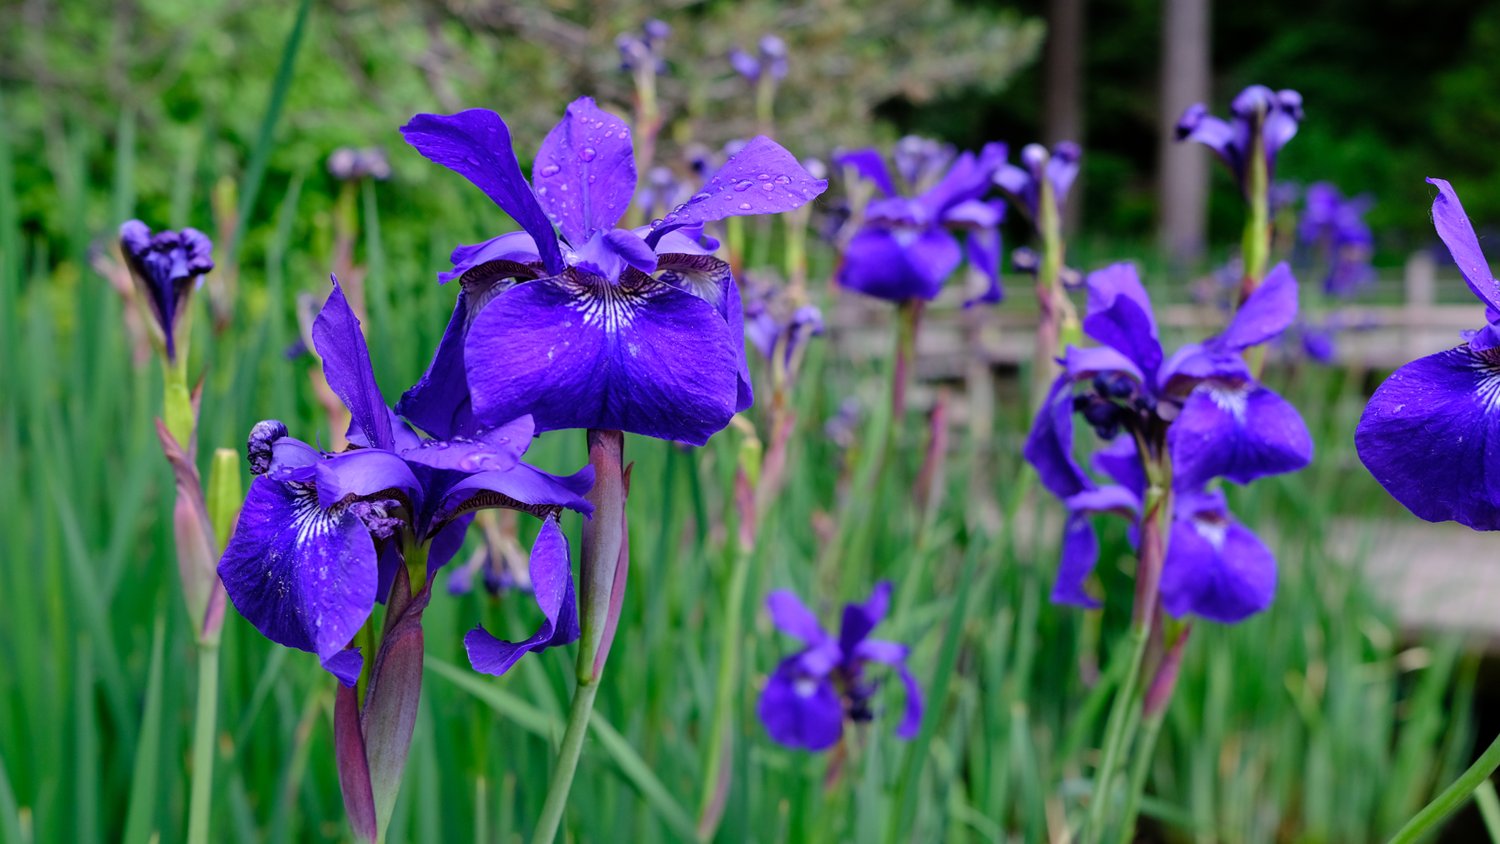 Drops of rain resting on the petals of the purple irises.